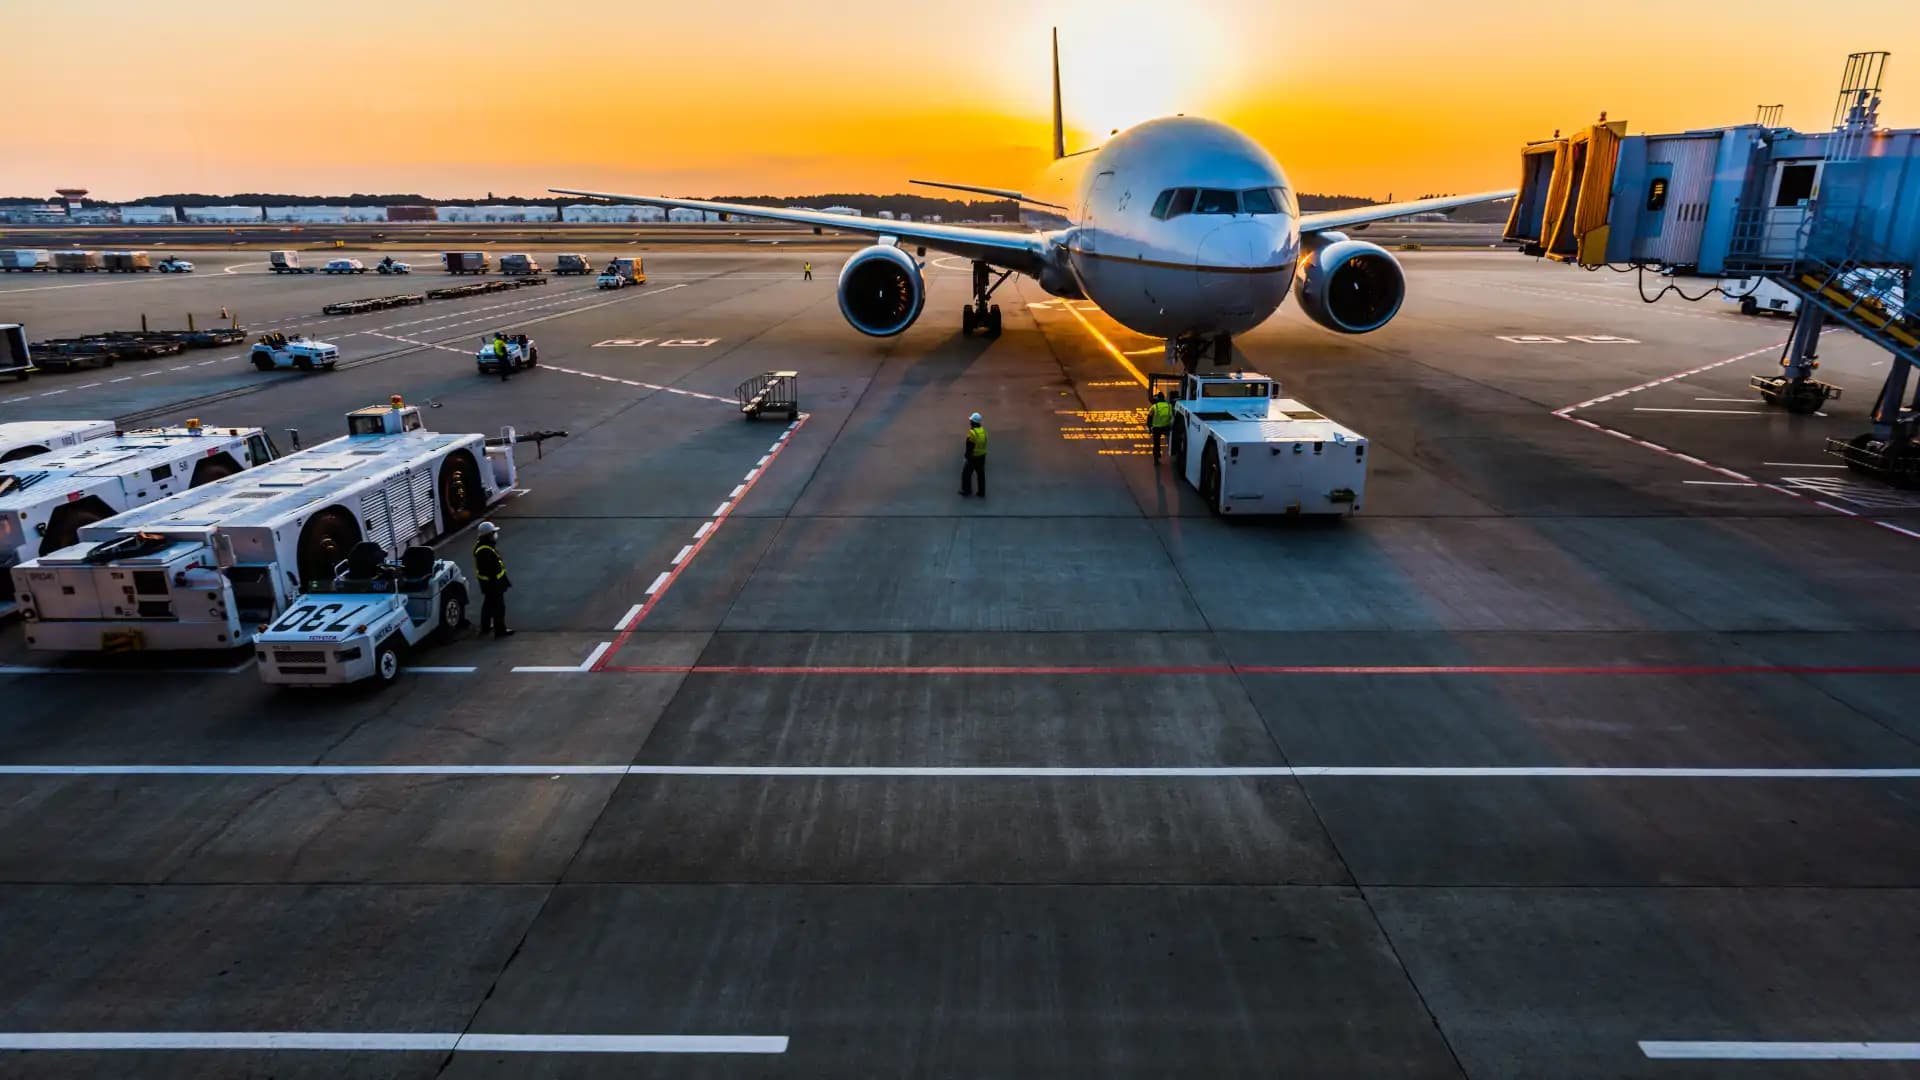 Airport Runway Material – Plane On An Airport Runway